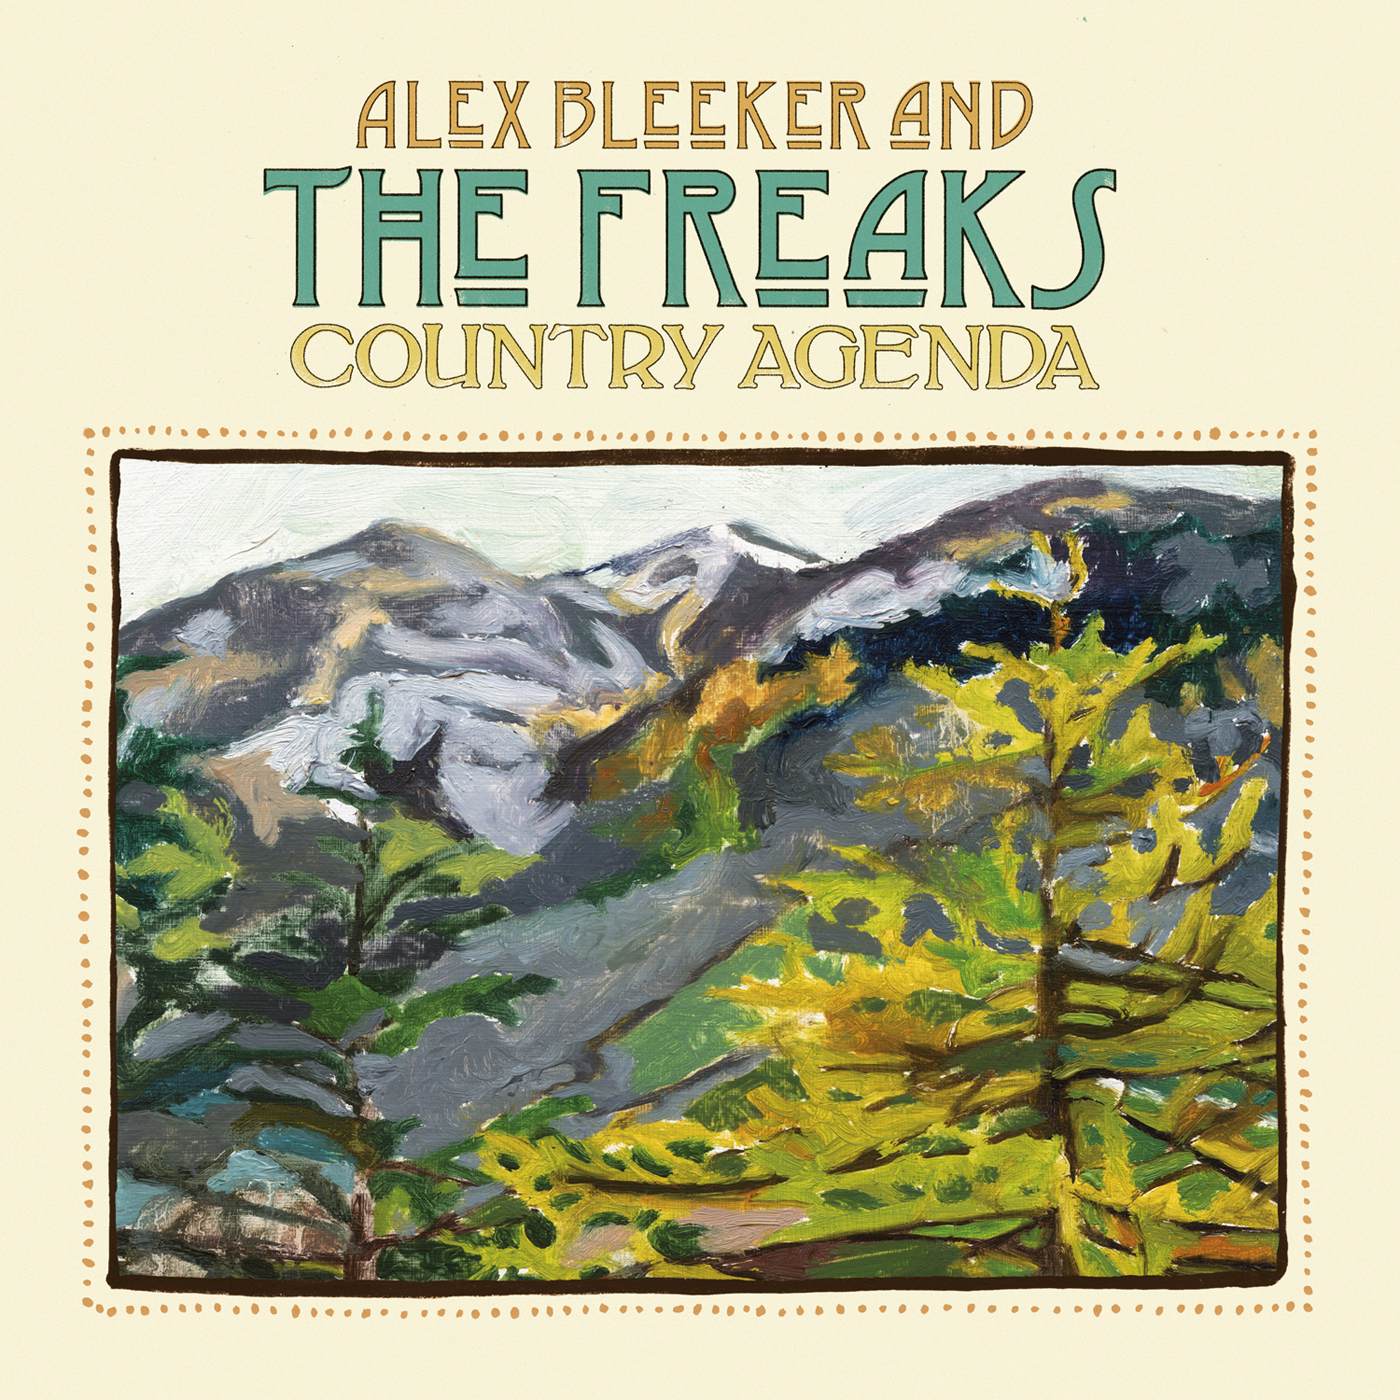 Alex Bleeker & The Freaks Country Agenda Vinyl Record